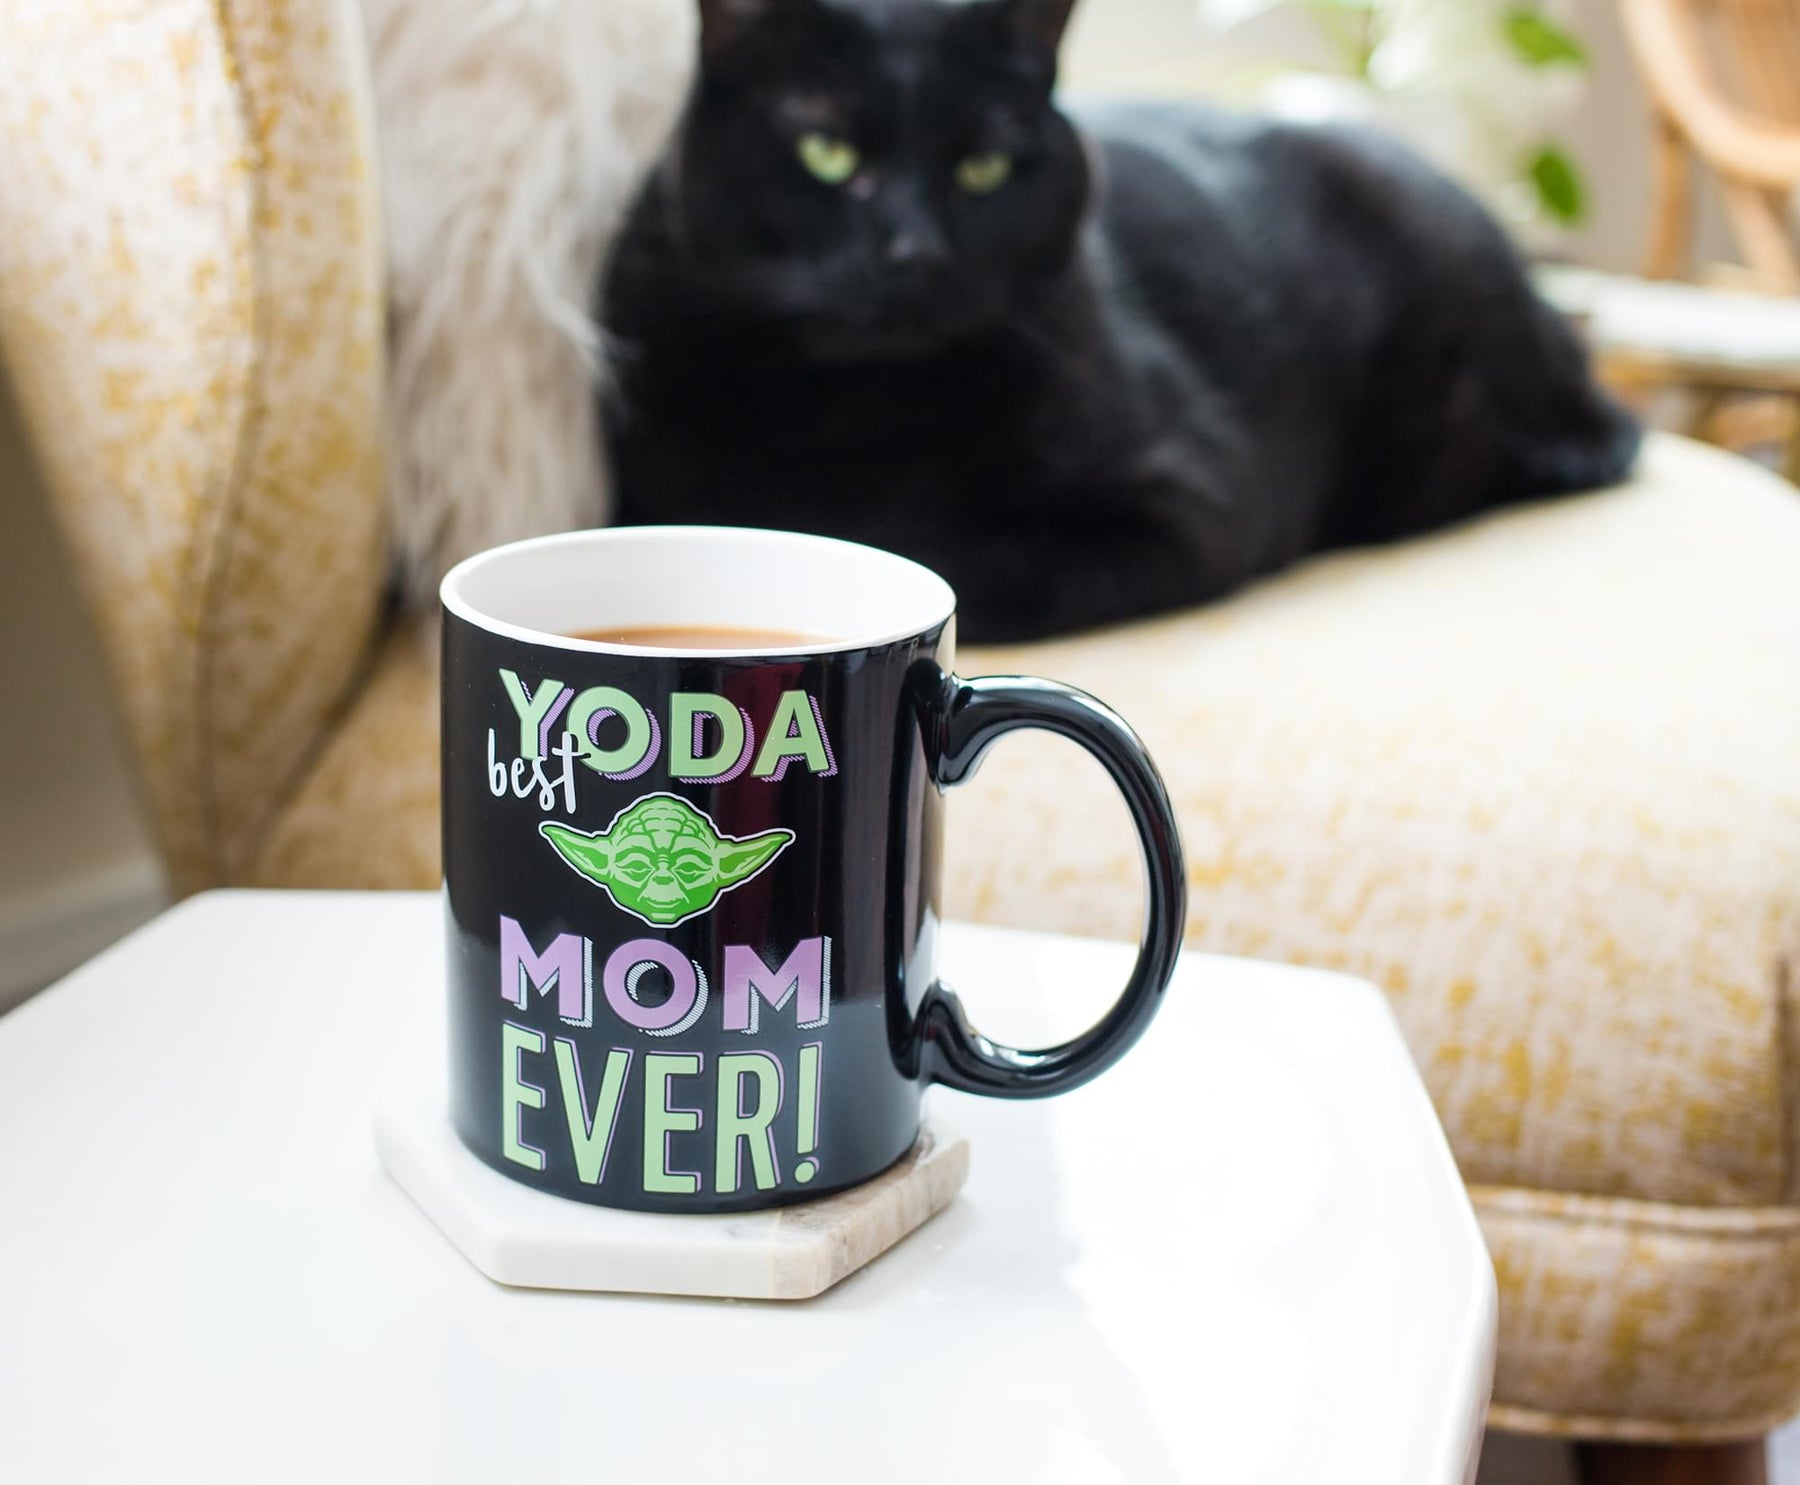 Star Wars "Yoda Best Mom Ever" Ceramic Mug | Holds 20 Ounces | Toynk Exclusive